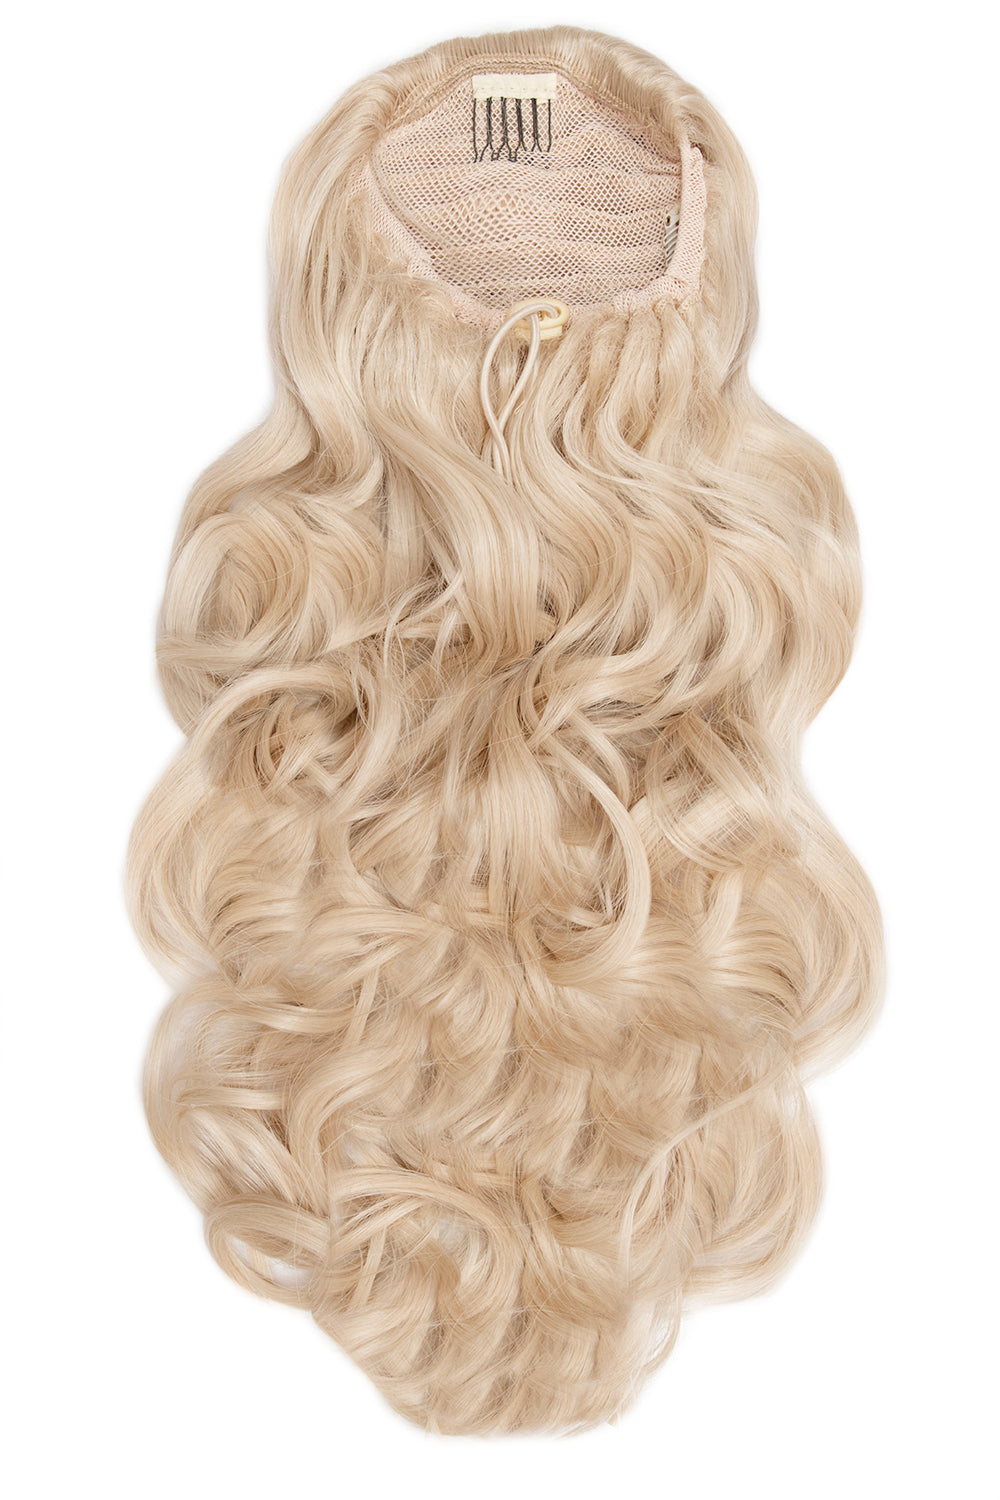 Curly Glam 22" Ponytail - Light Golden Blonde